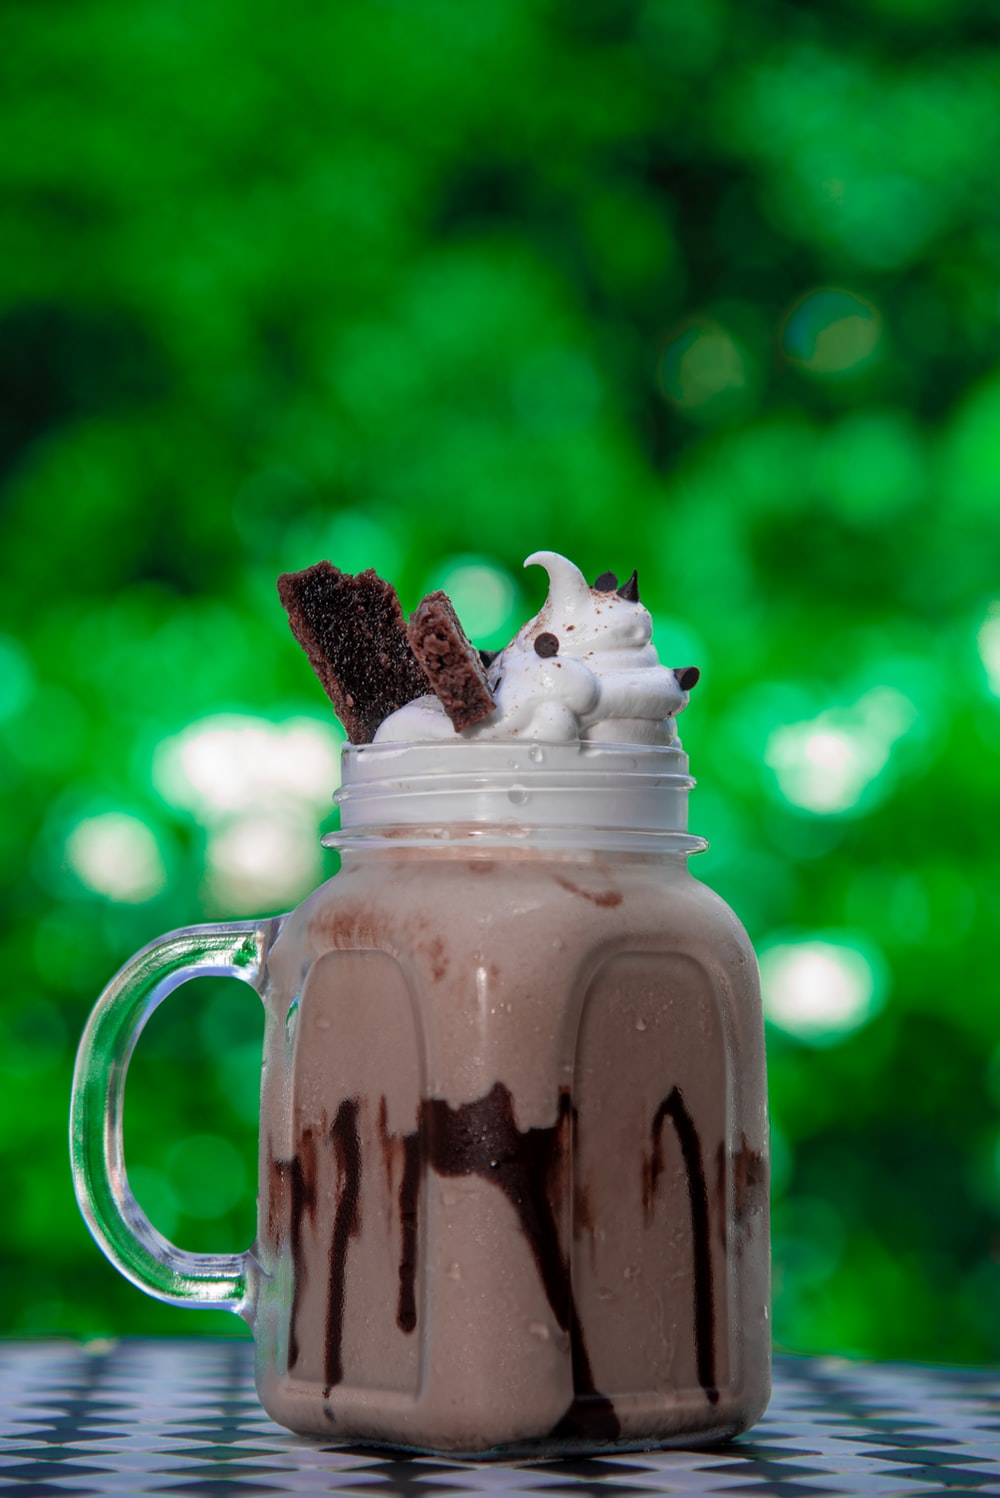 Chocolate Milkshake Picture. Download Free Image